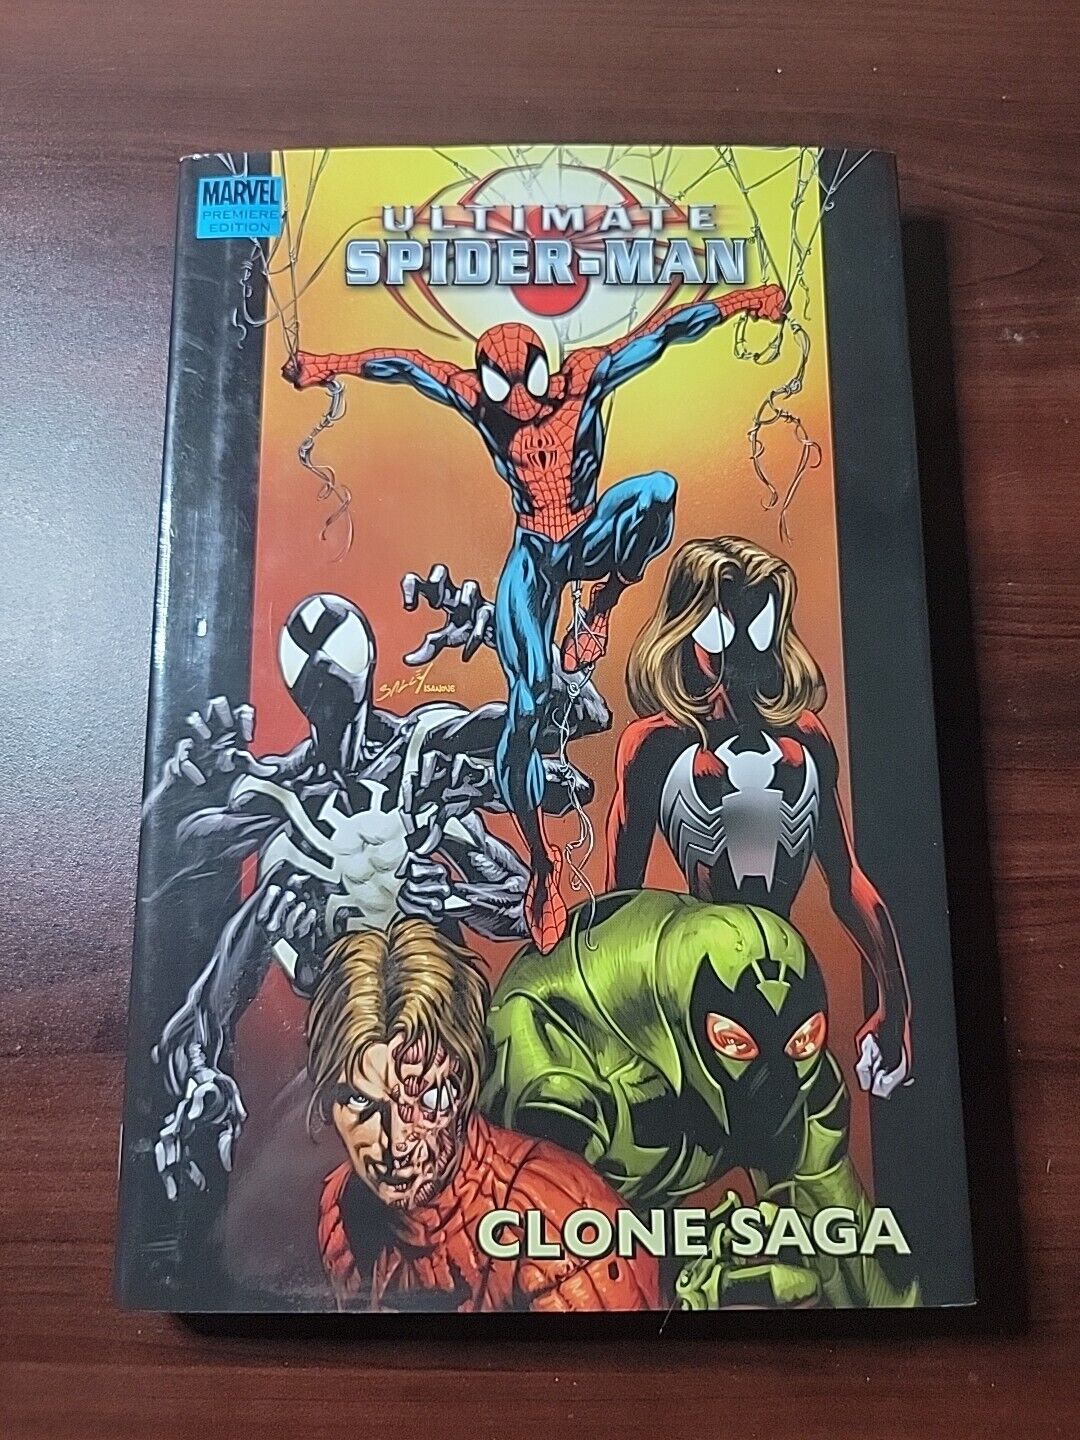 Marvel Premiere Edition Ultimate Spider-Man: Clone Saga Hardcover